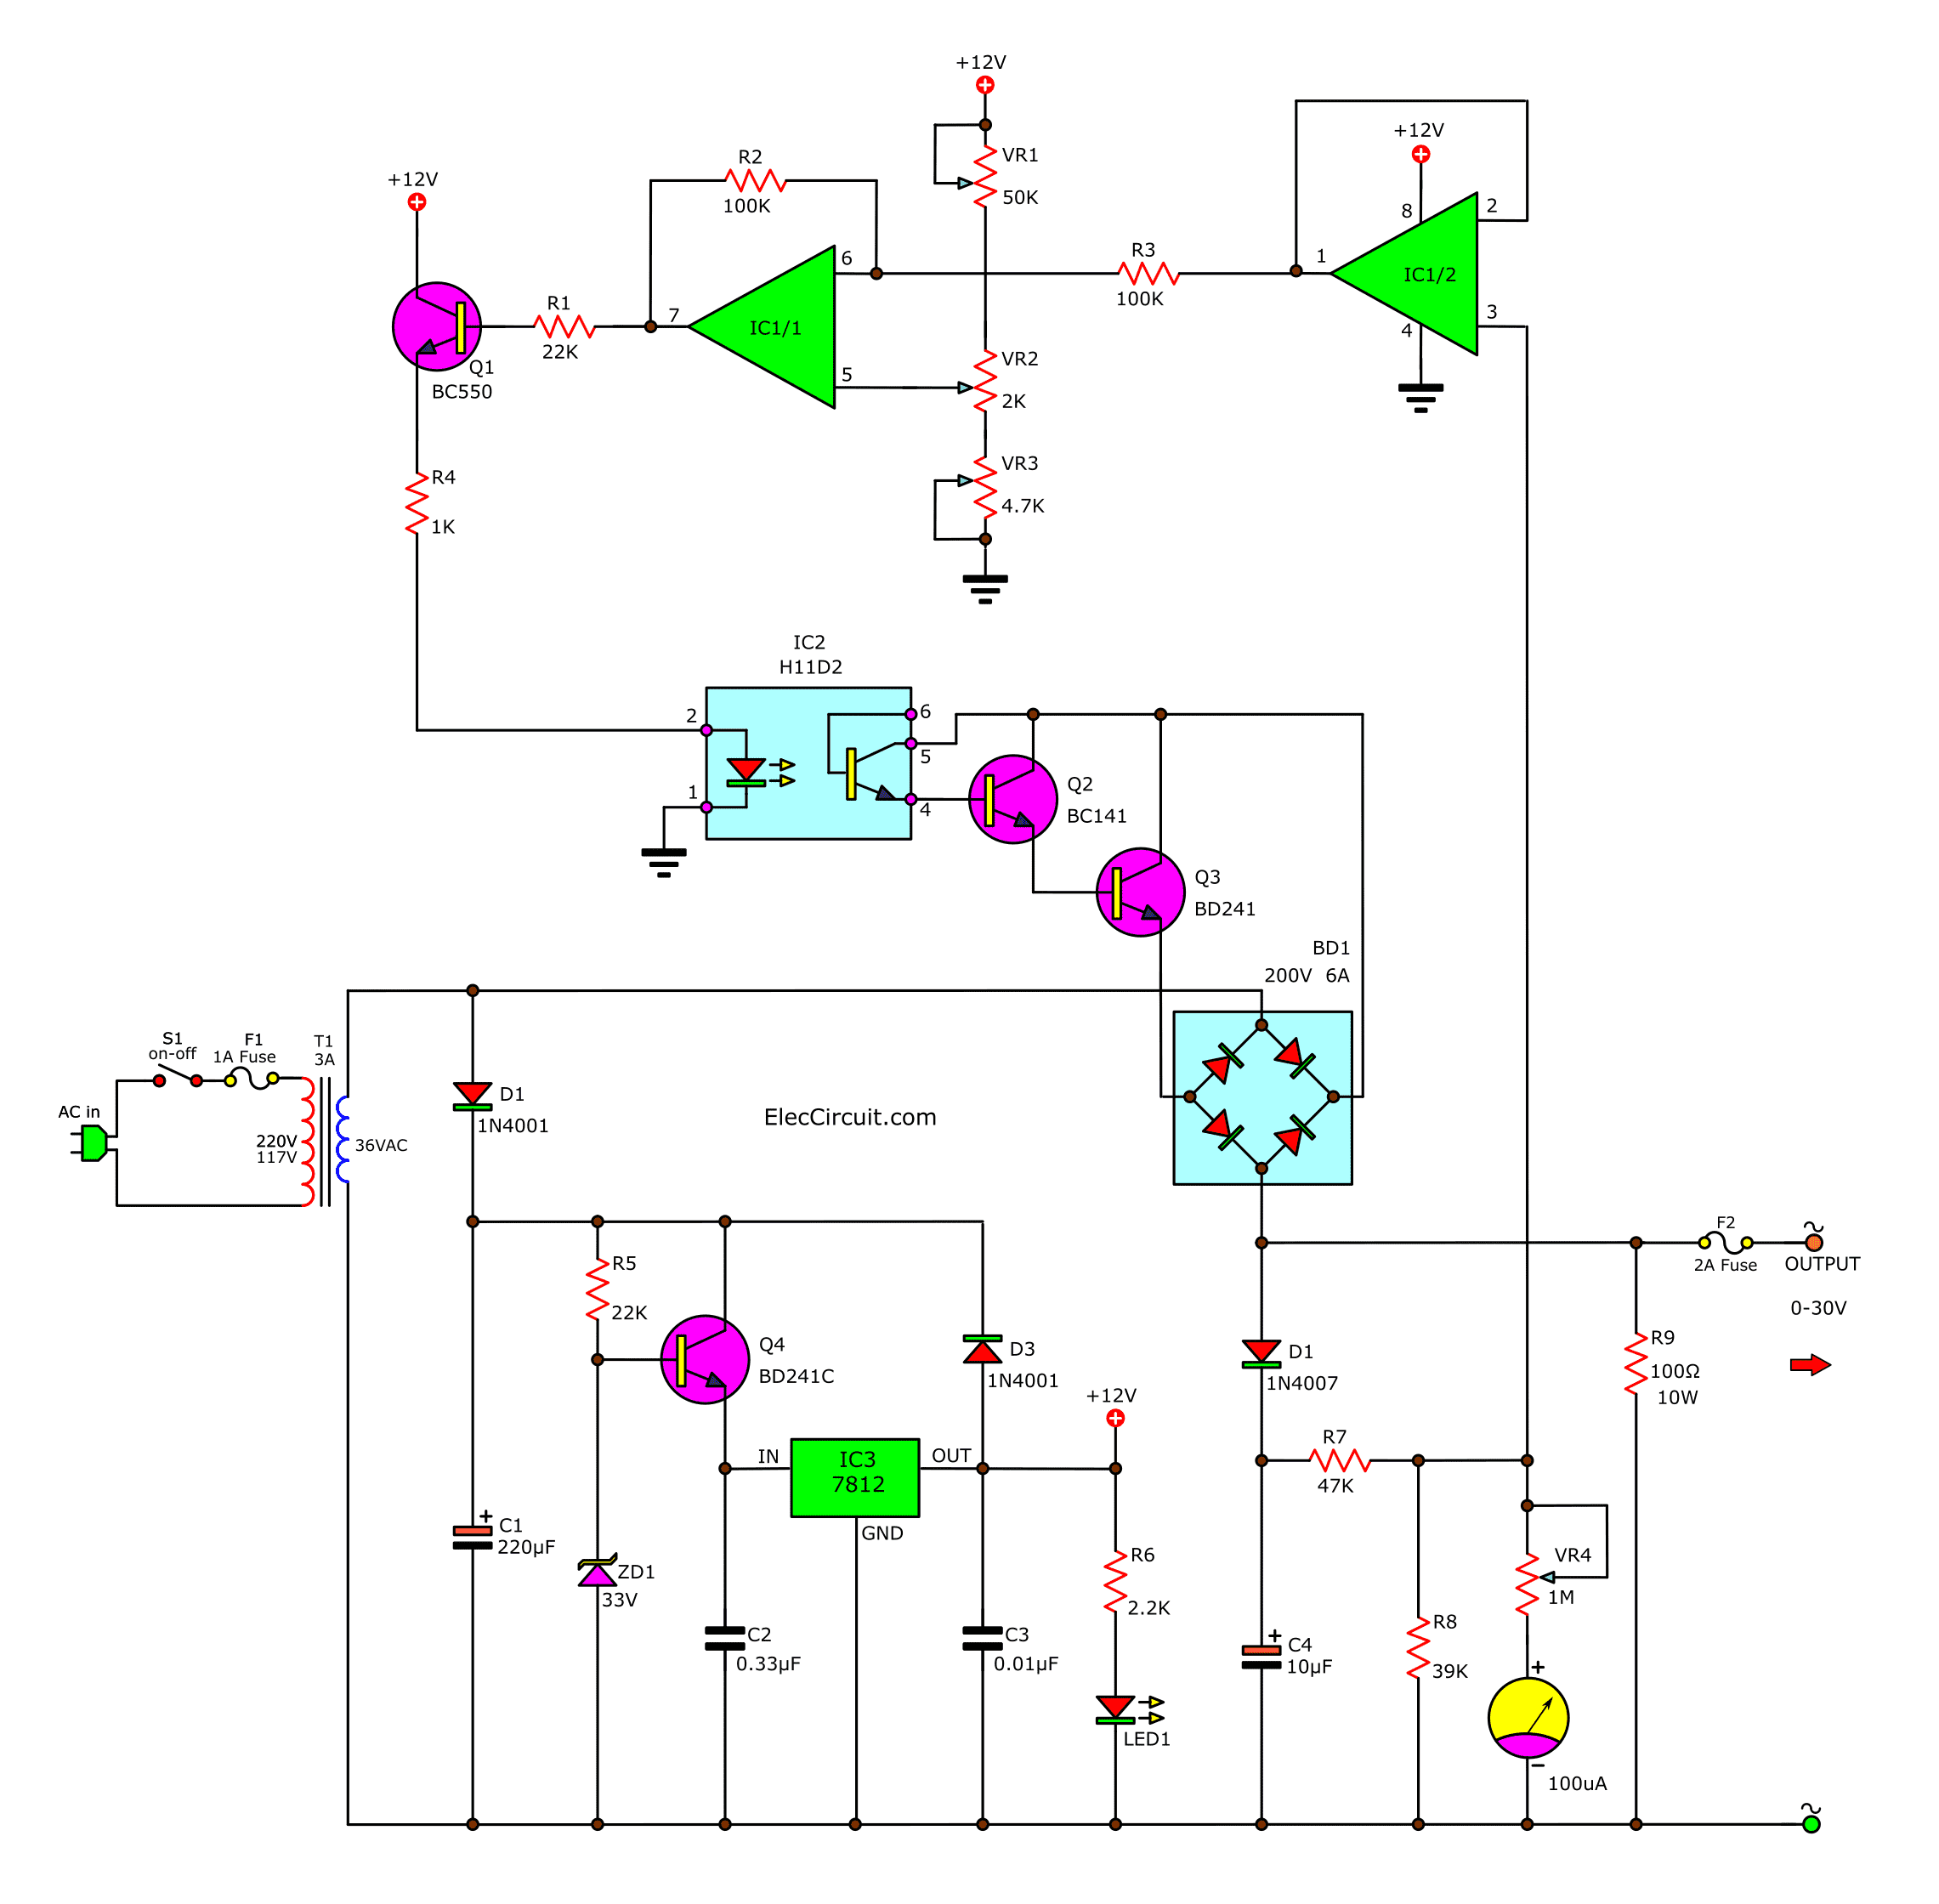 AC variable power supply, 0-30V 3A